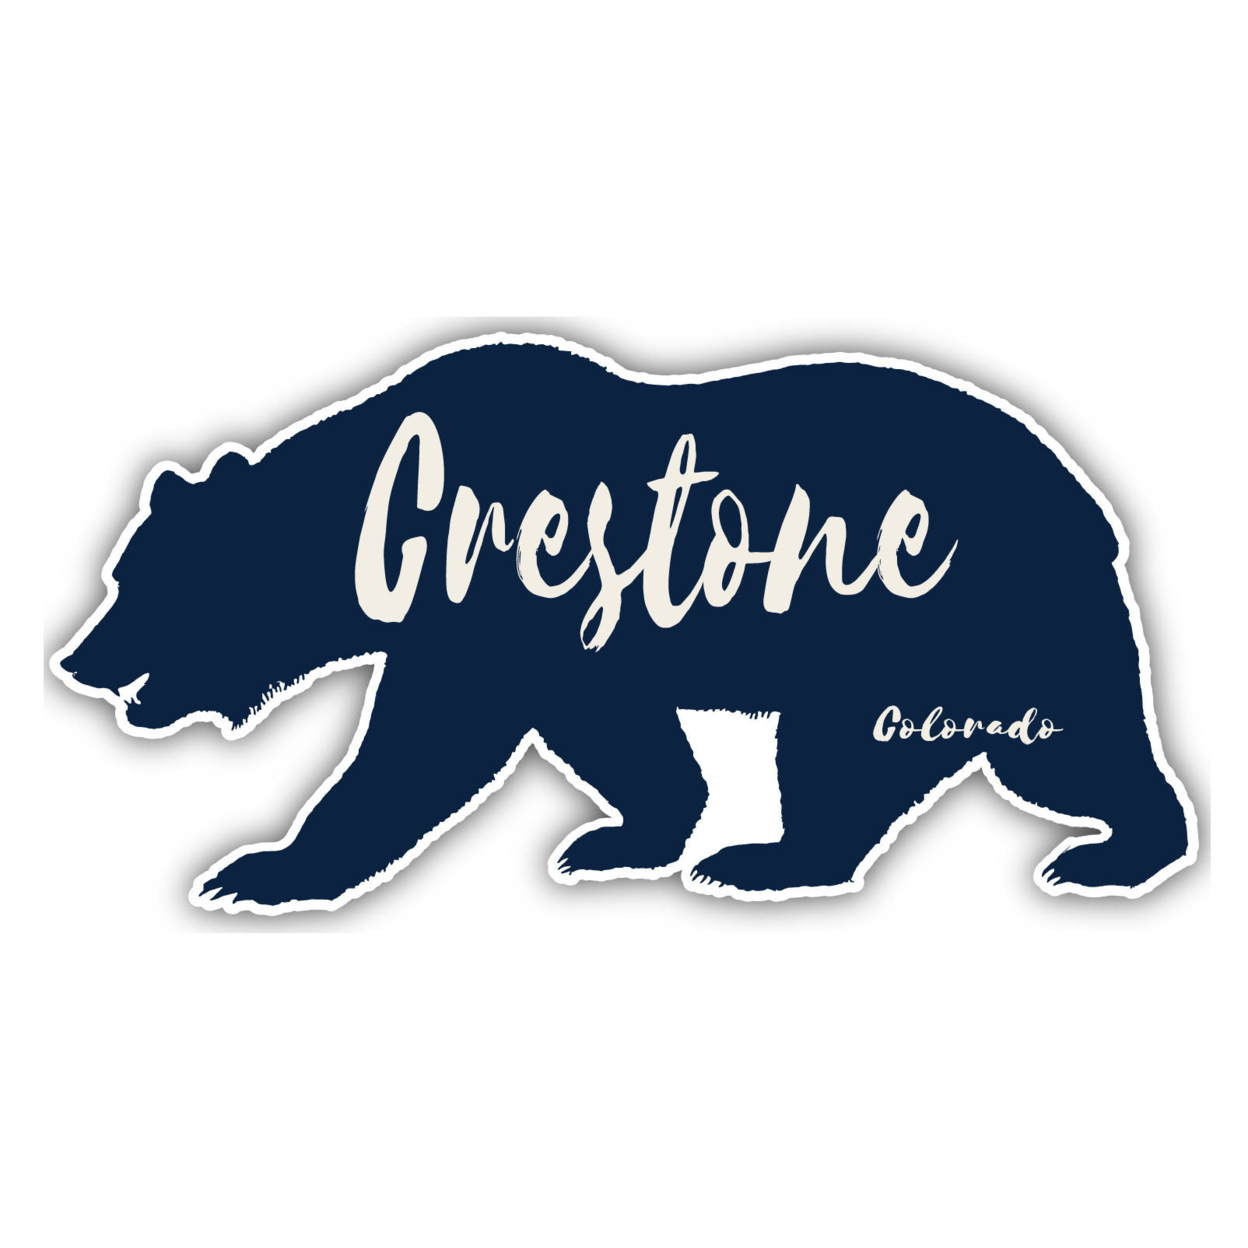 Crestone Colorado Souvenir Decorative Stickers (Choose Theme And Size) - 4-Pack, 6-Inch, Camp Life